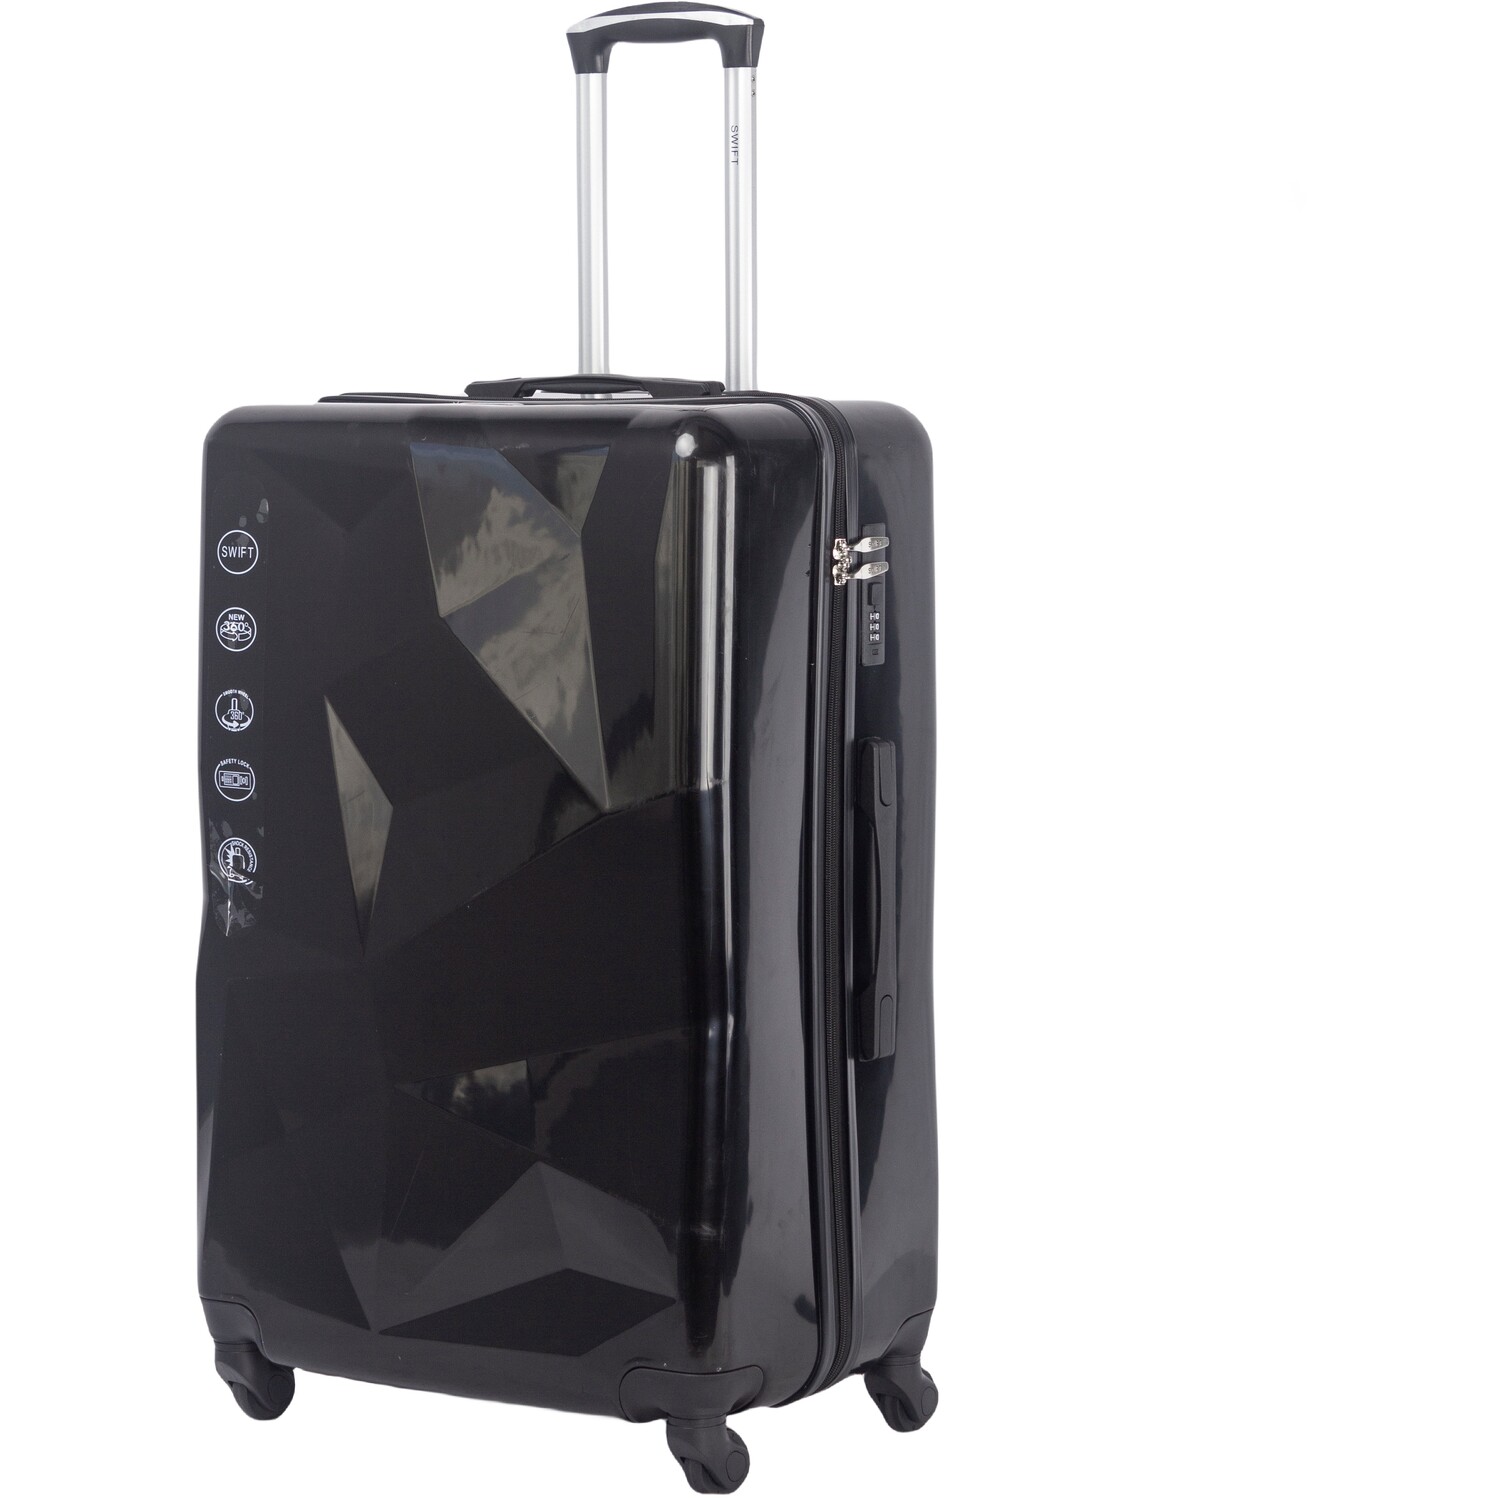 Swift Comet Suitcase - Black / Large Case Image 2